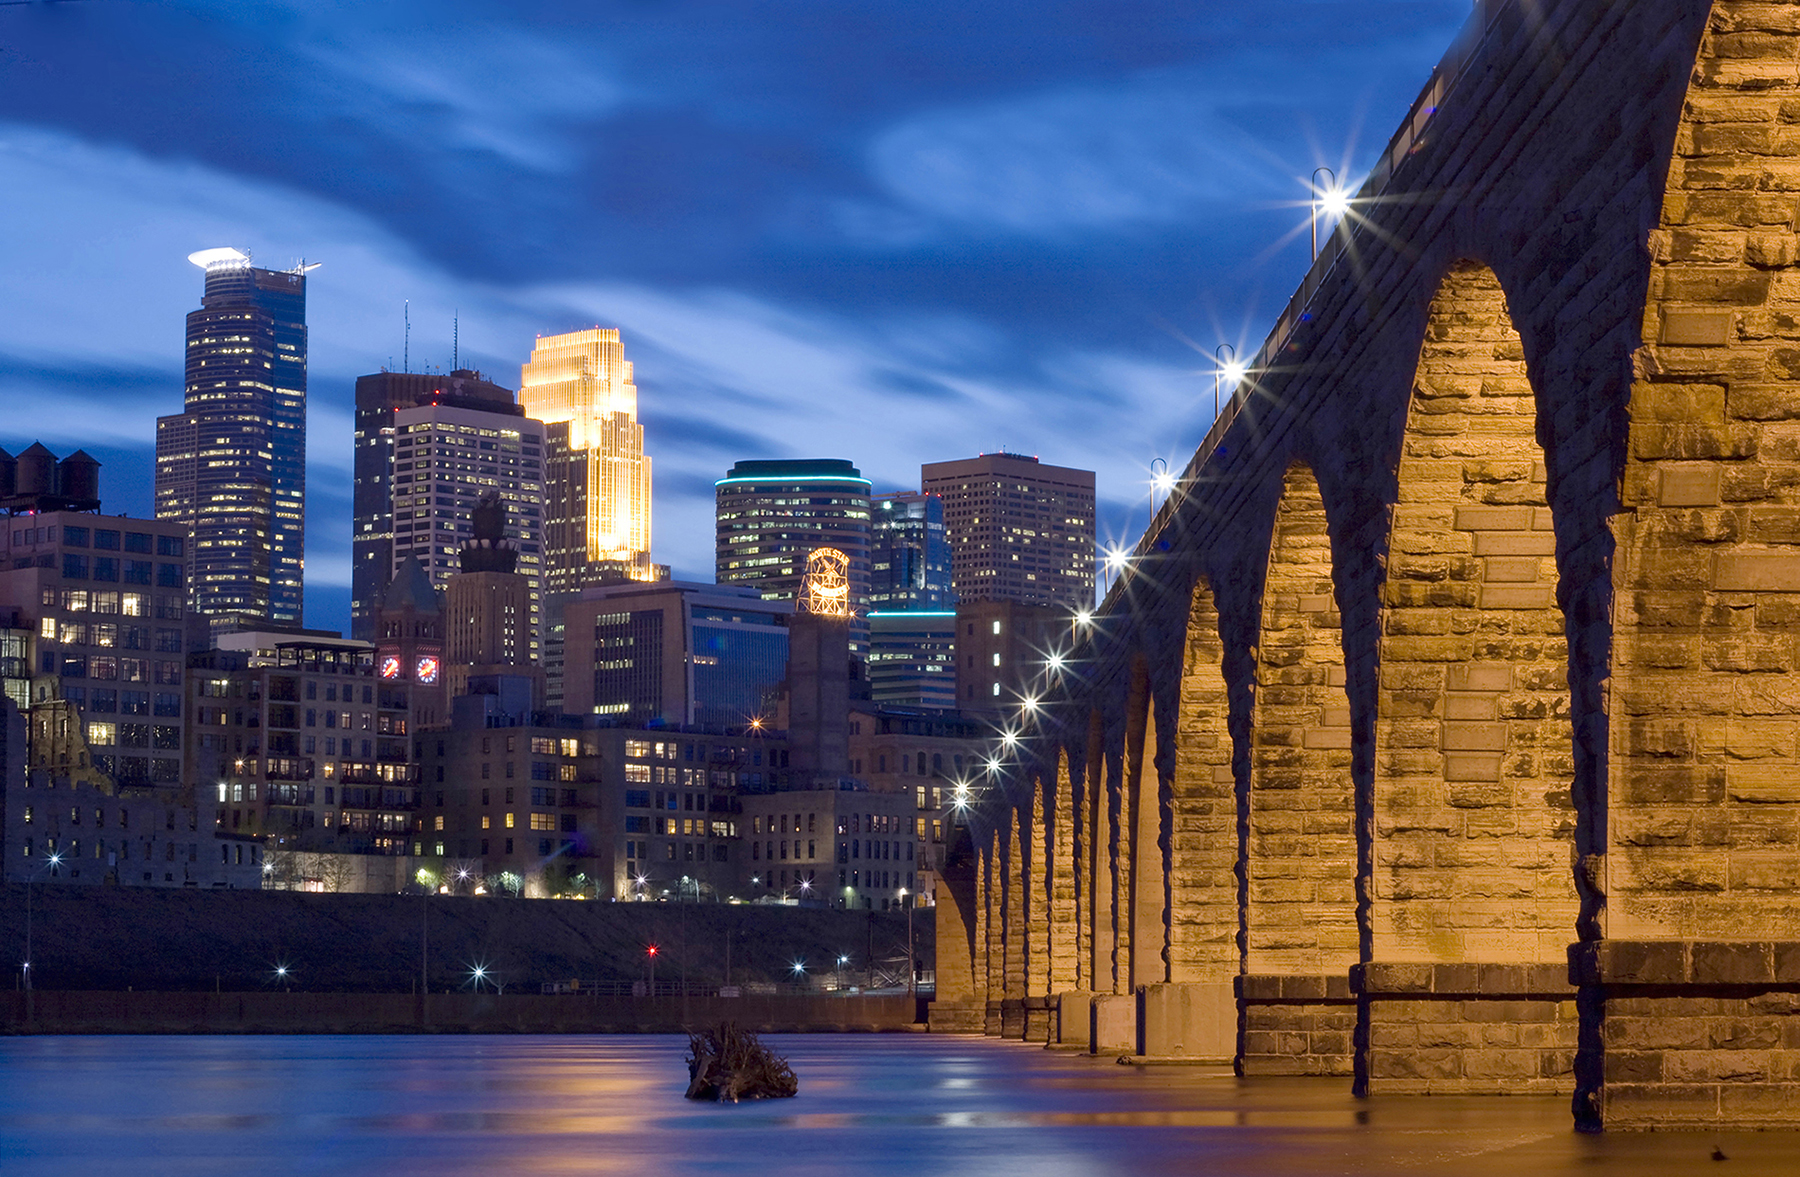 Nighttime photo of the Minneapolis, MN skyline and lighted Stone Arch bridge